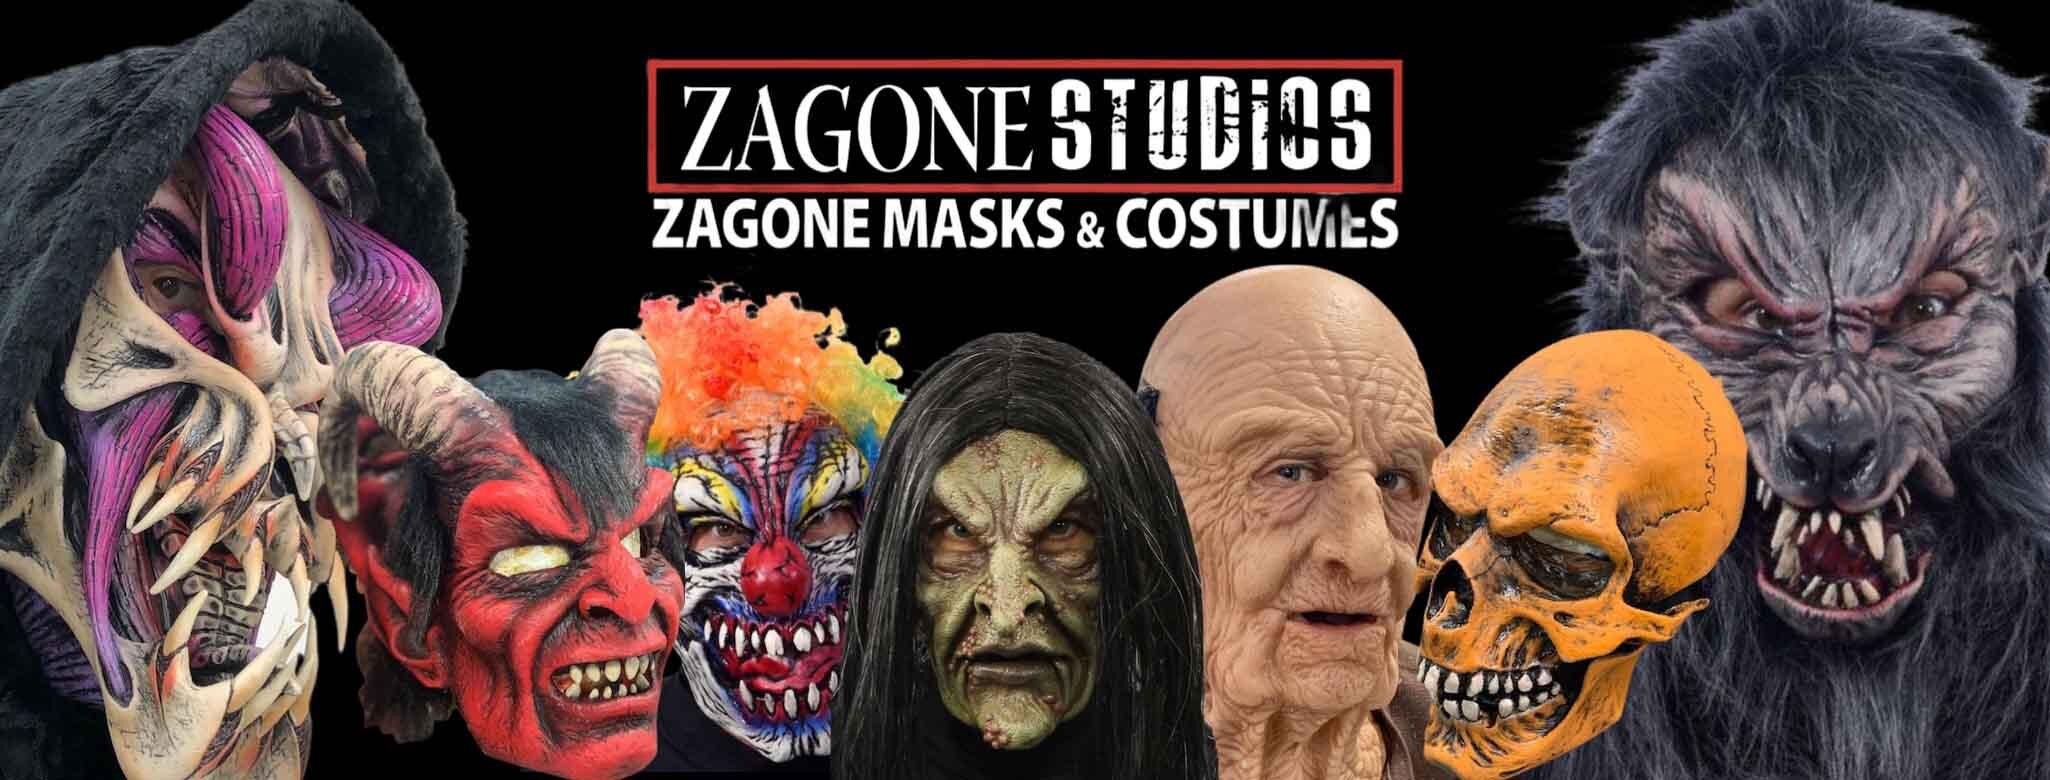 Zagone Studios masks and costumes